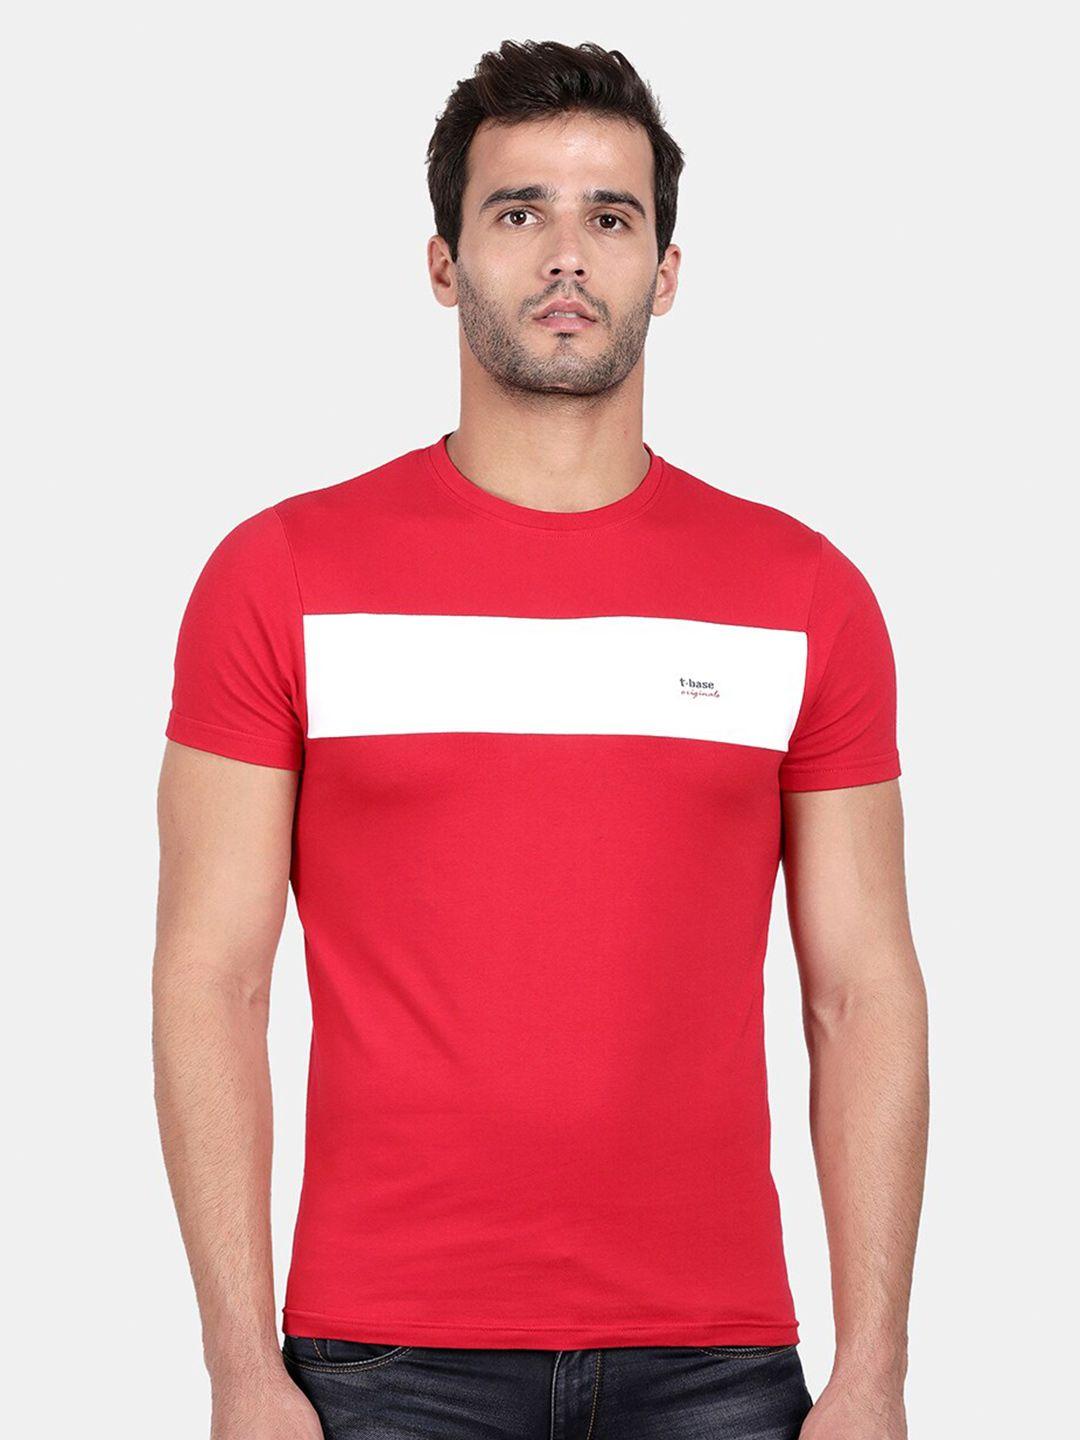 t-base men red colourblocked slim fit cotton t-shirt